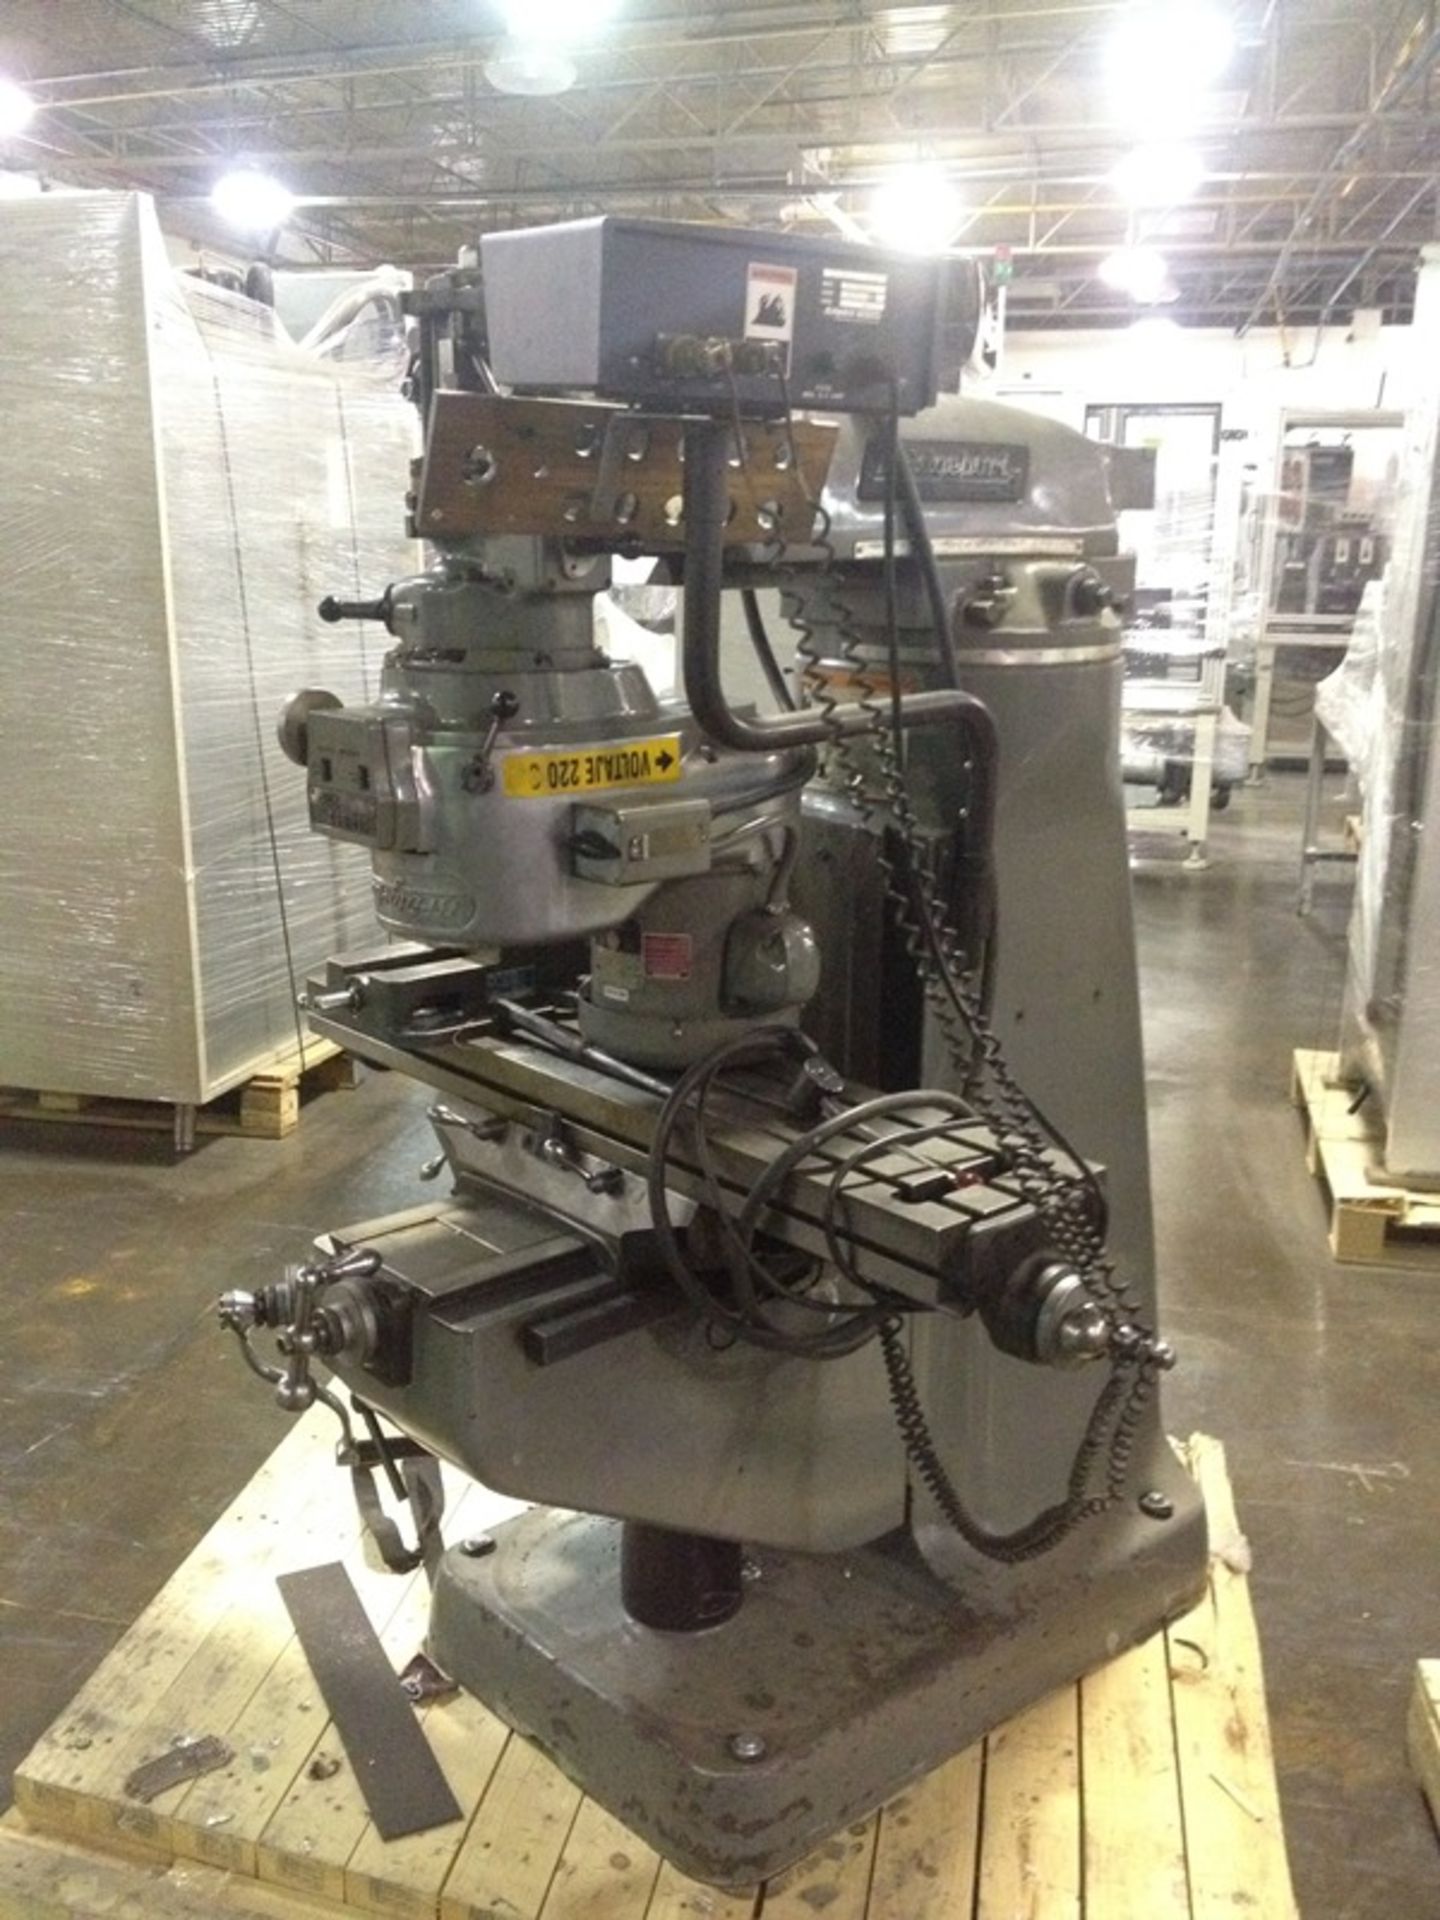 2HP Milling Machine, Brand: Bridgeport, Series: 2J 123204-2. Condition: Good, Location: Cd. Juarez - Image 4 of 20